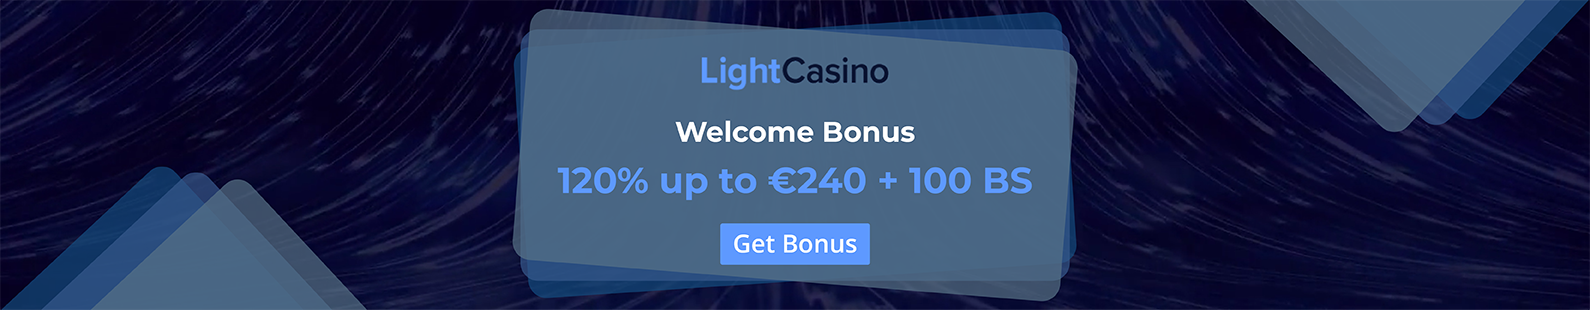 LightCasino Welcome Bonus of €240 - Big